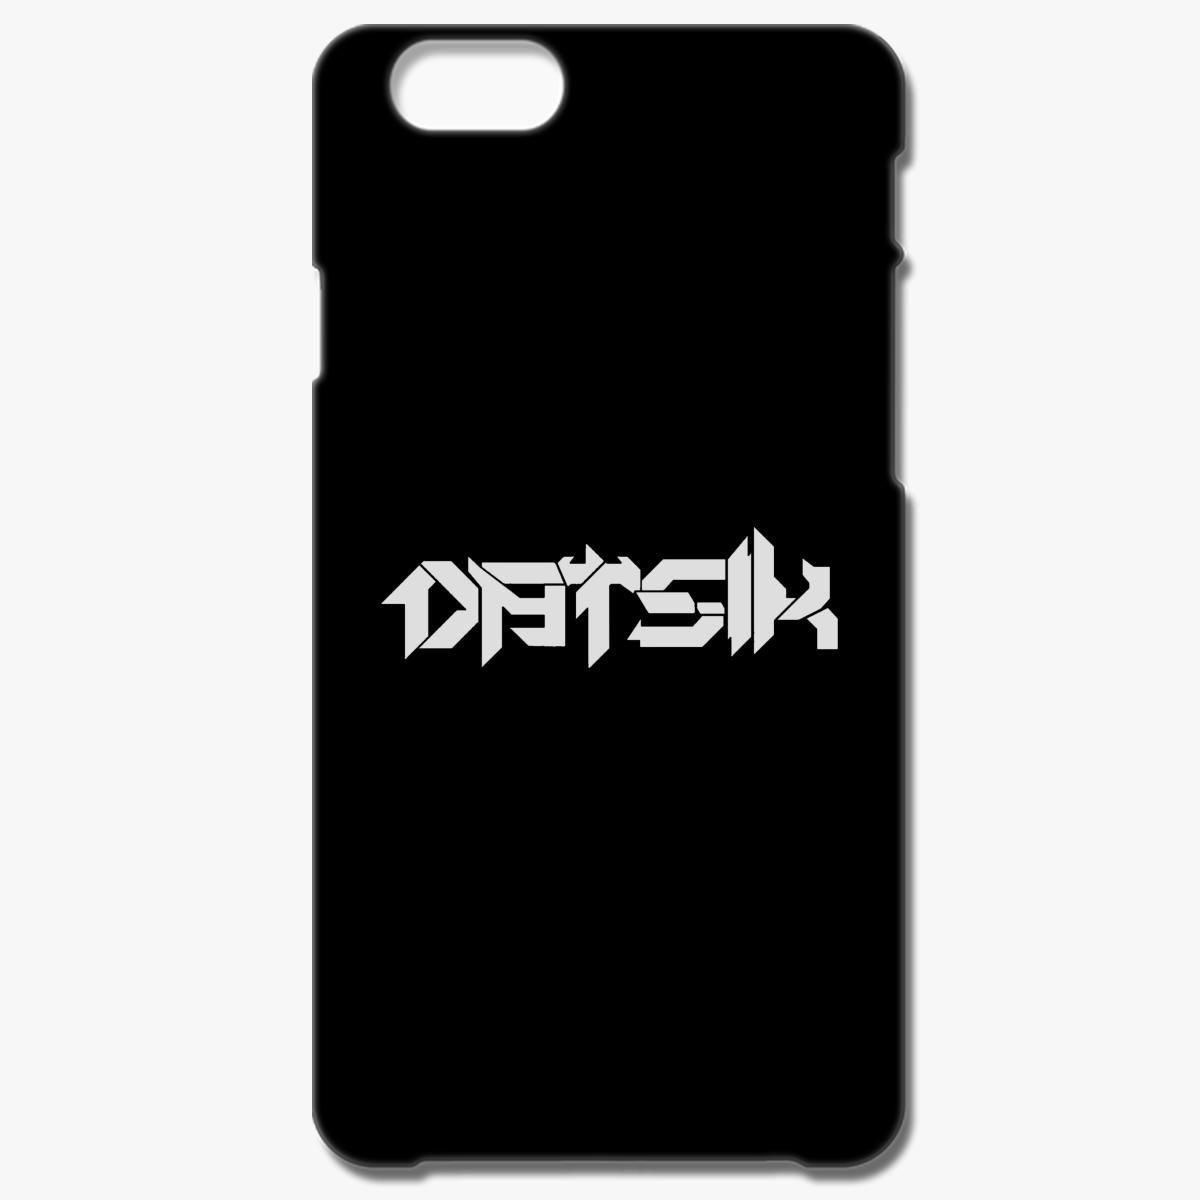 Datsik Logo - Datsik Logo IPhone 6 6S Case